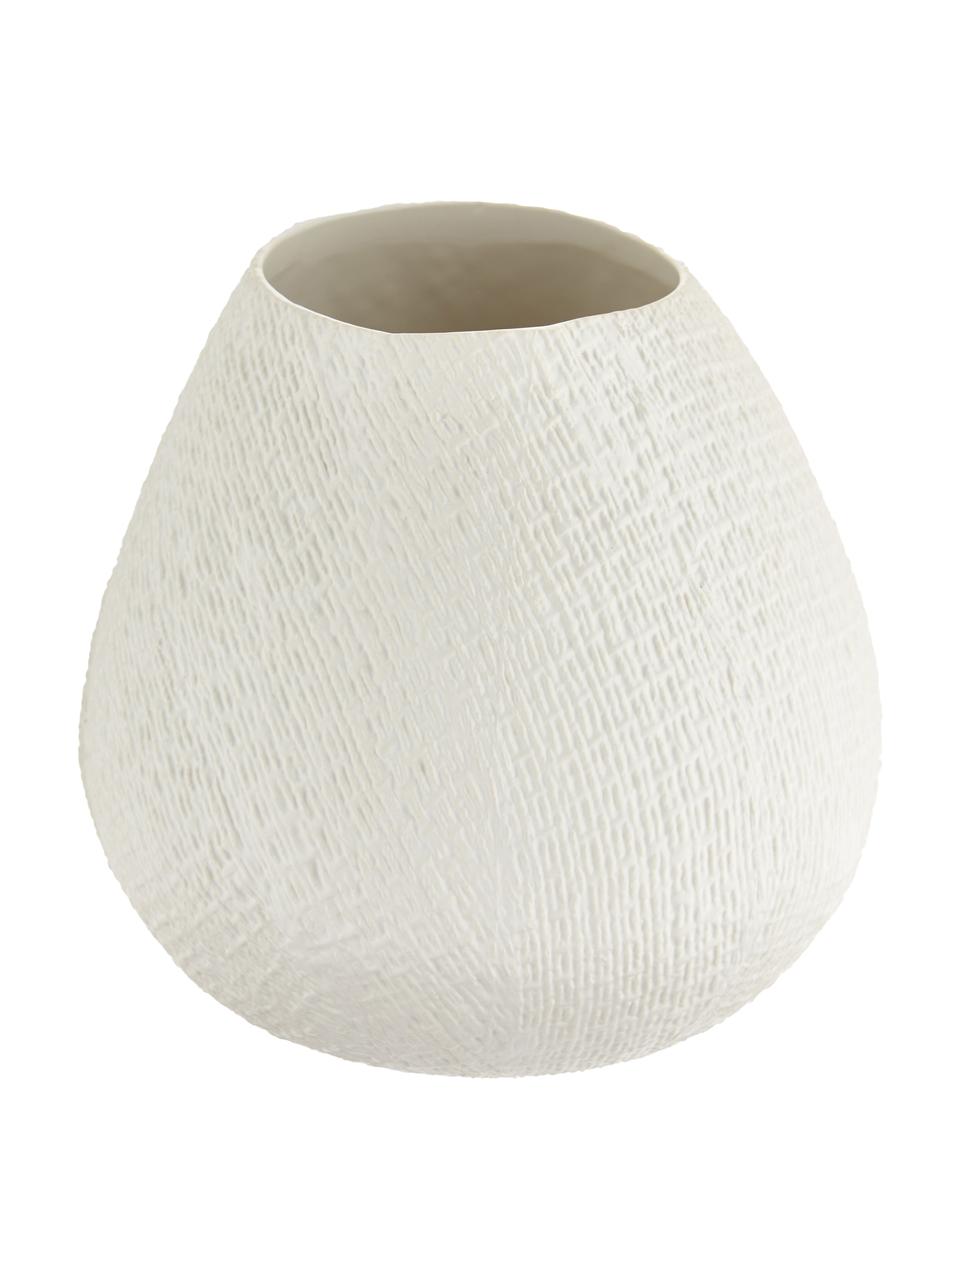 Vaso decorativo fatto a mano Wendy, Ceramica, Bianco crema opaco, Ø 19 x Alt. 20 cm